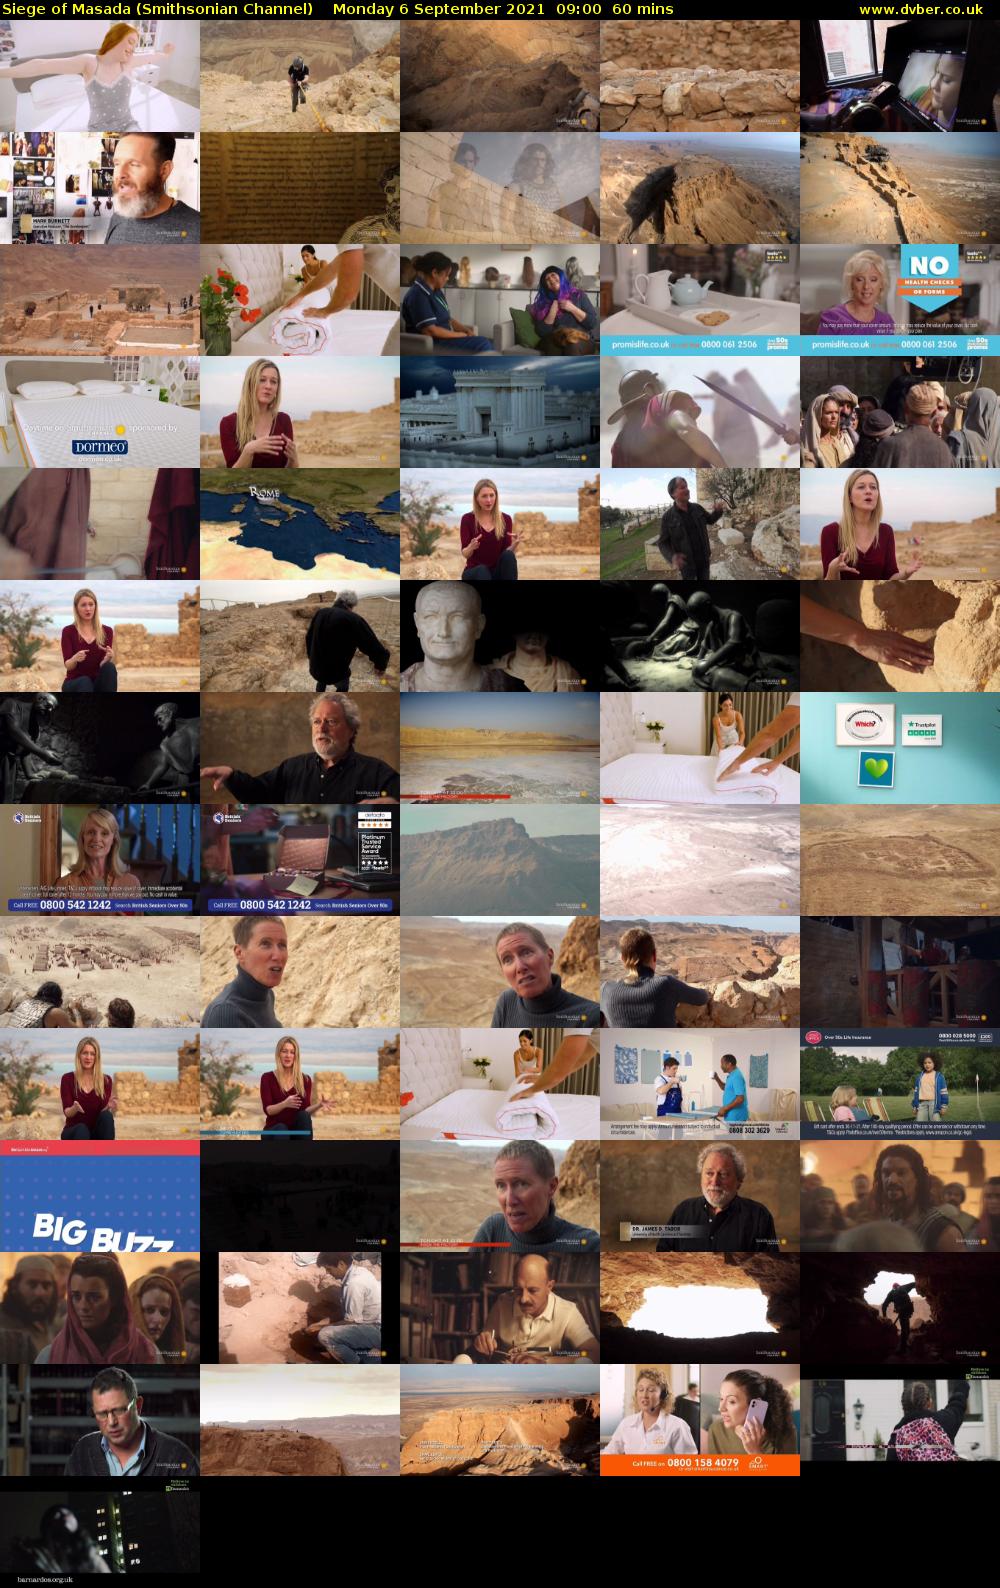 Siege of Masada (Smithsonian Channel) Monday 6 September 2021 10:00 - 11:00